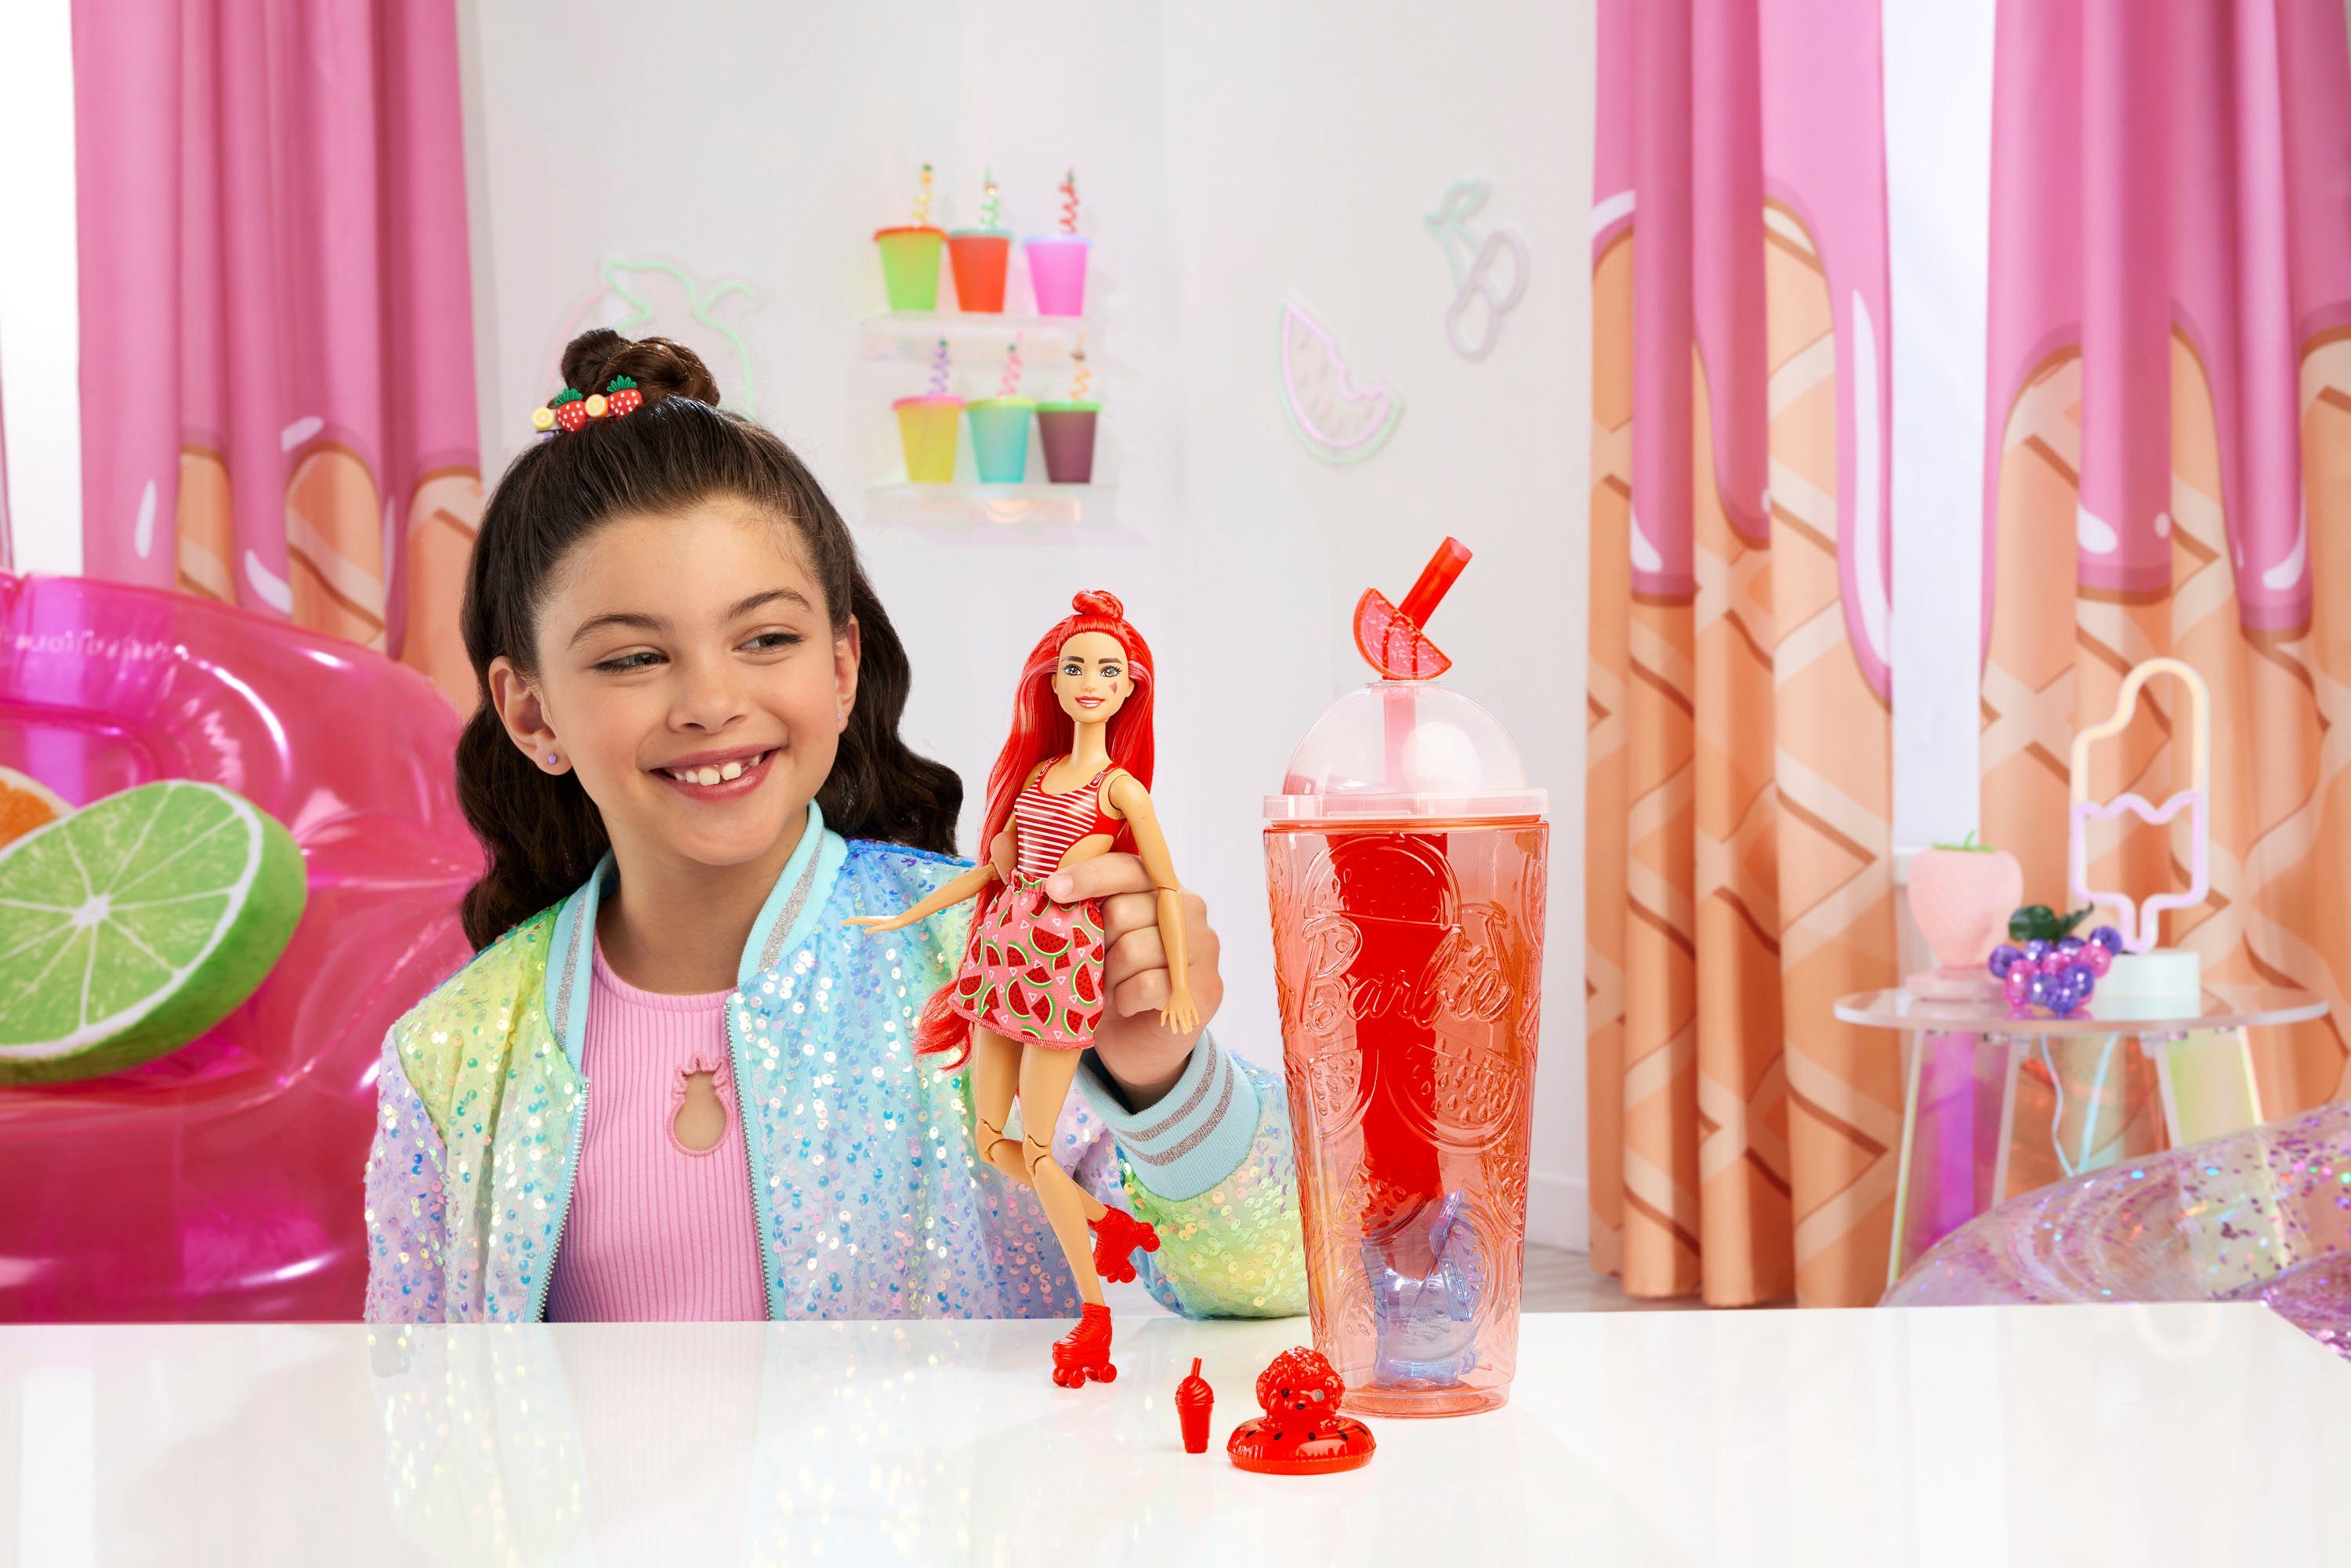 Fruit, Pop! Barbie Farbwechsel Reveal, Anziehpuppe Wassermelonendesign, mit